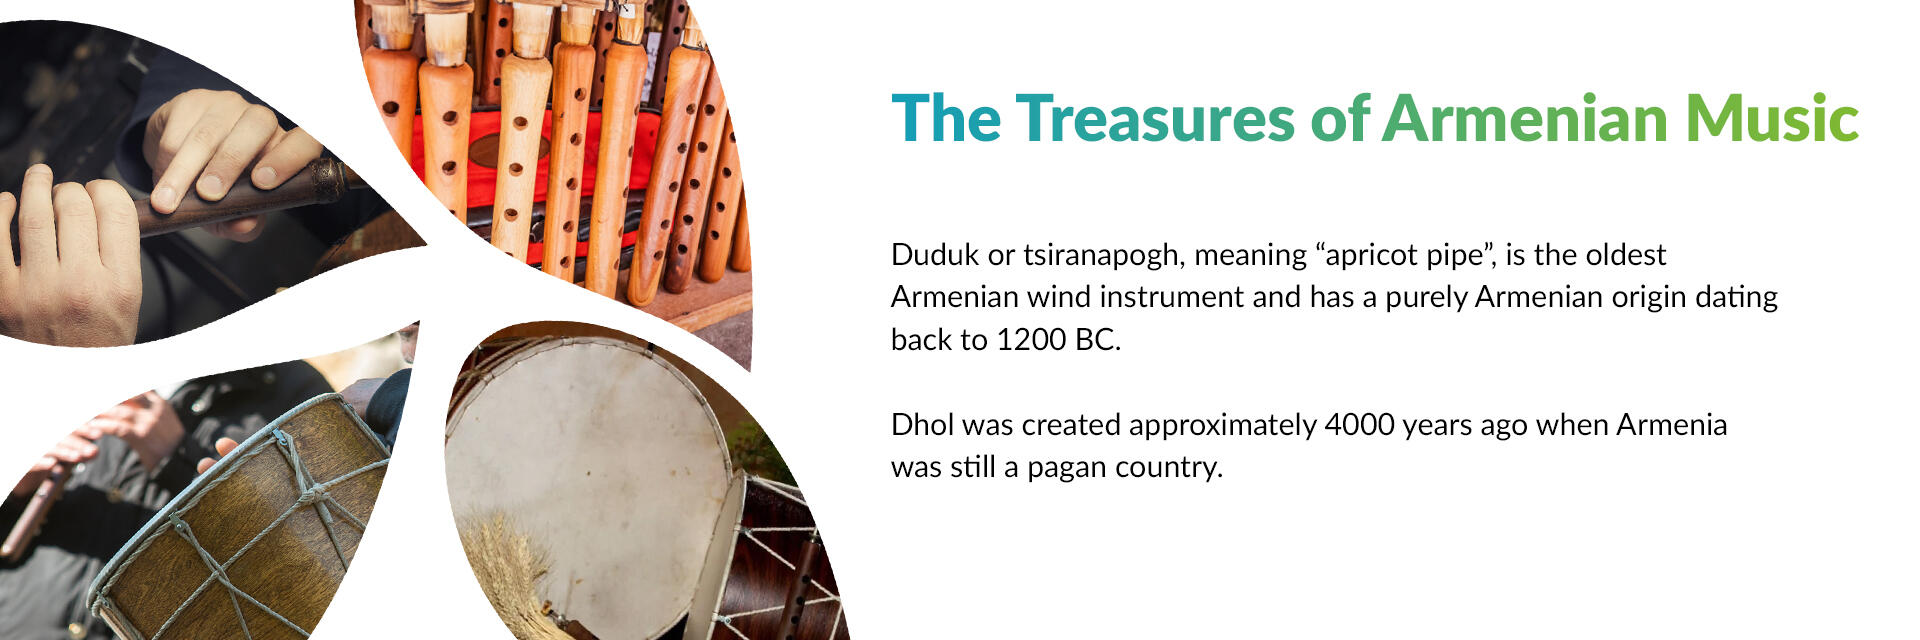 Armat_The Treasures of Armenian Music